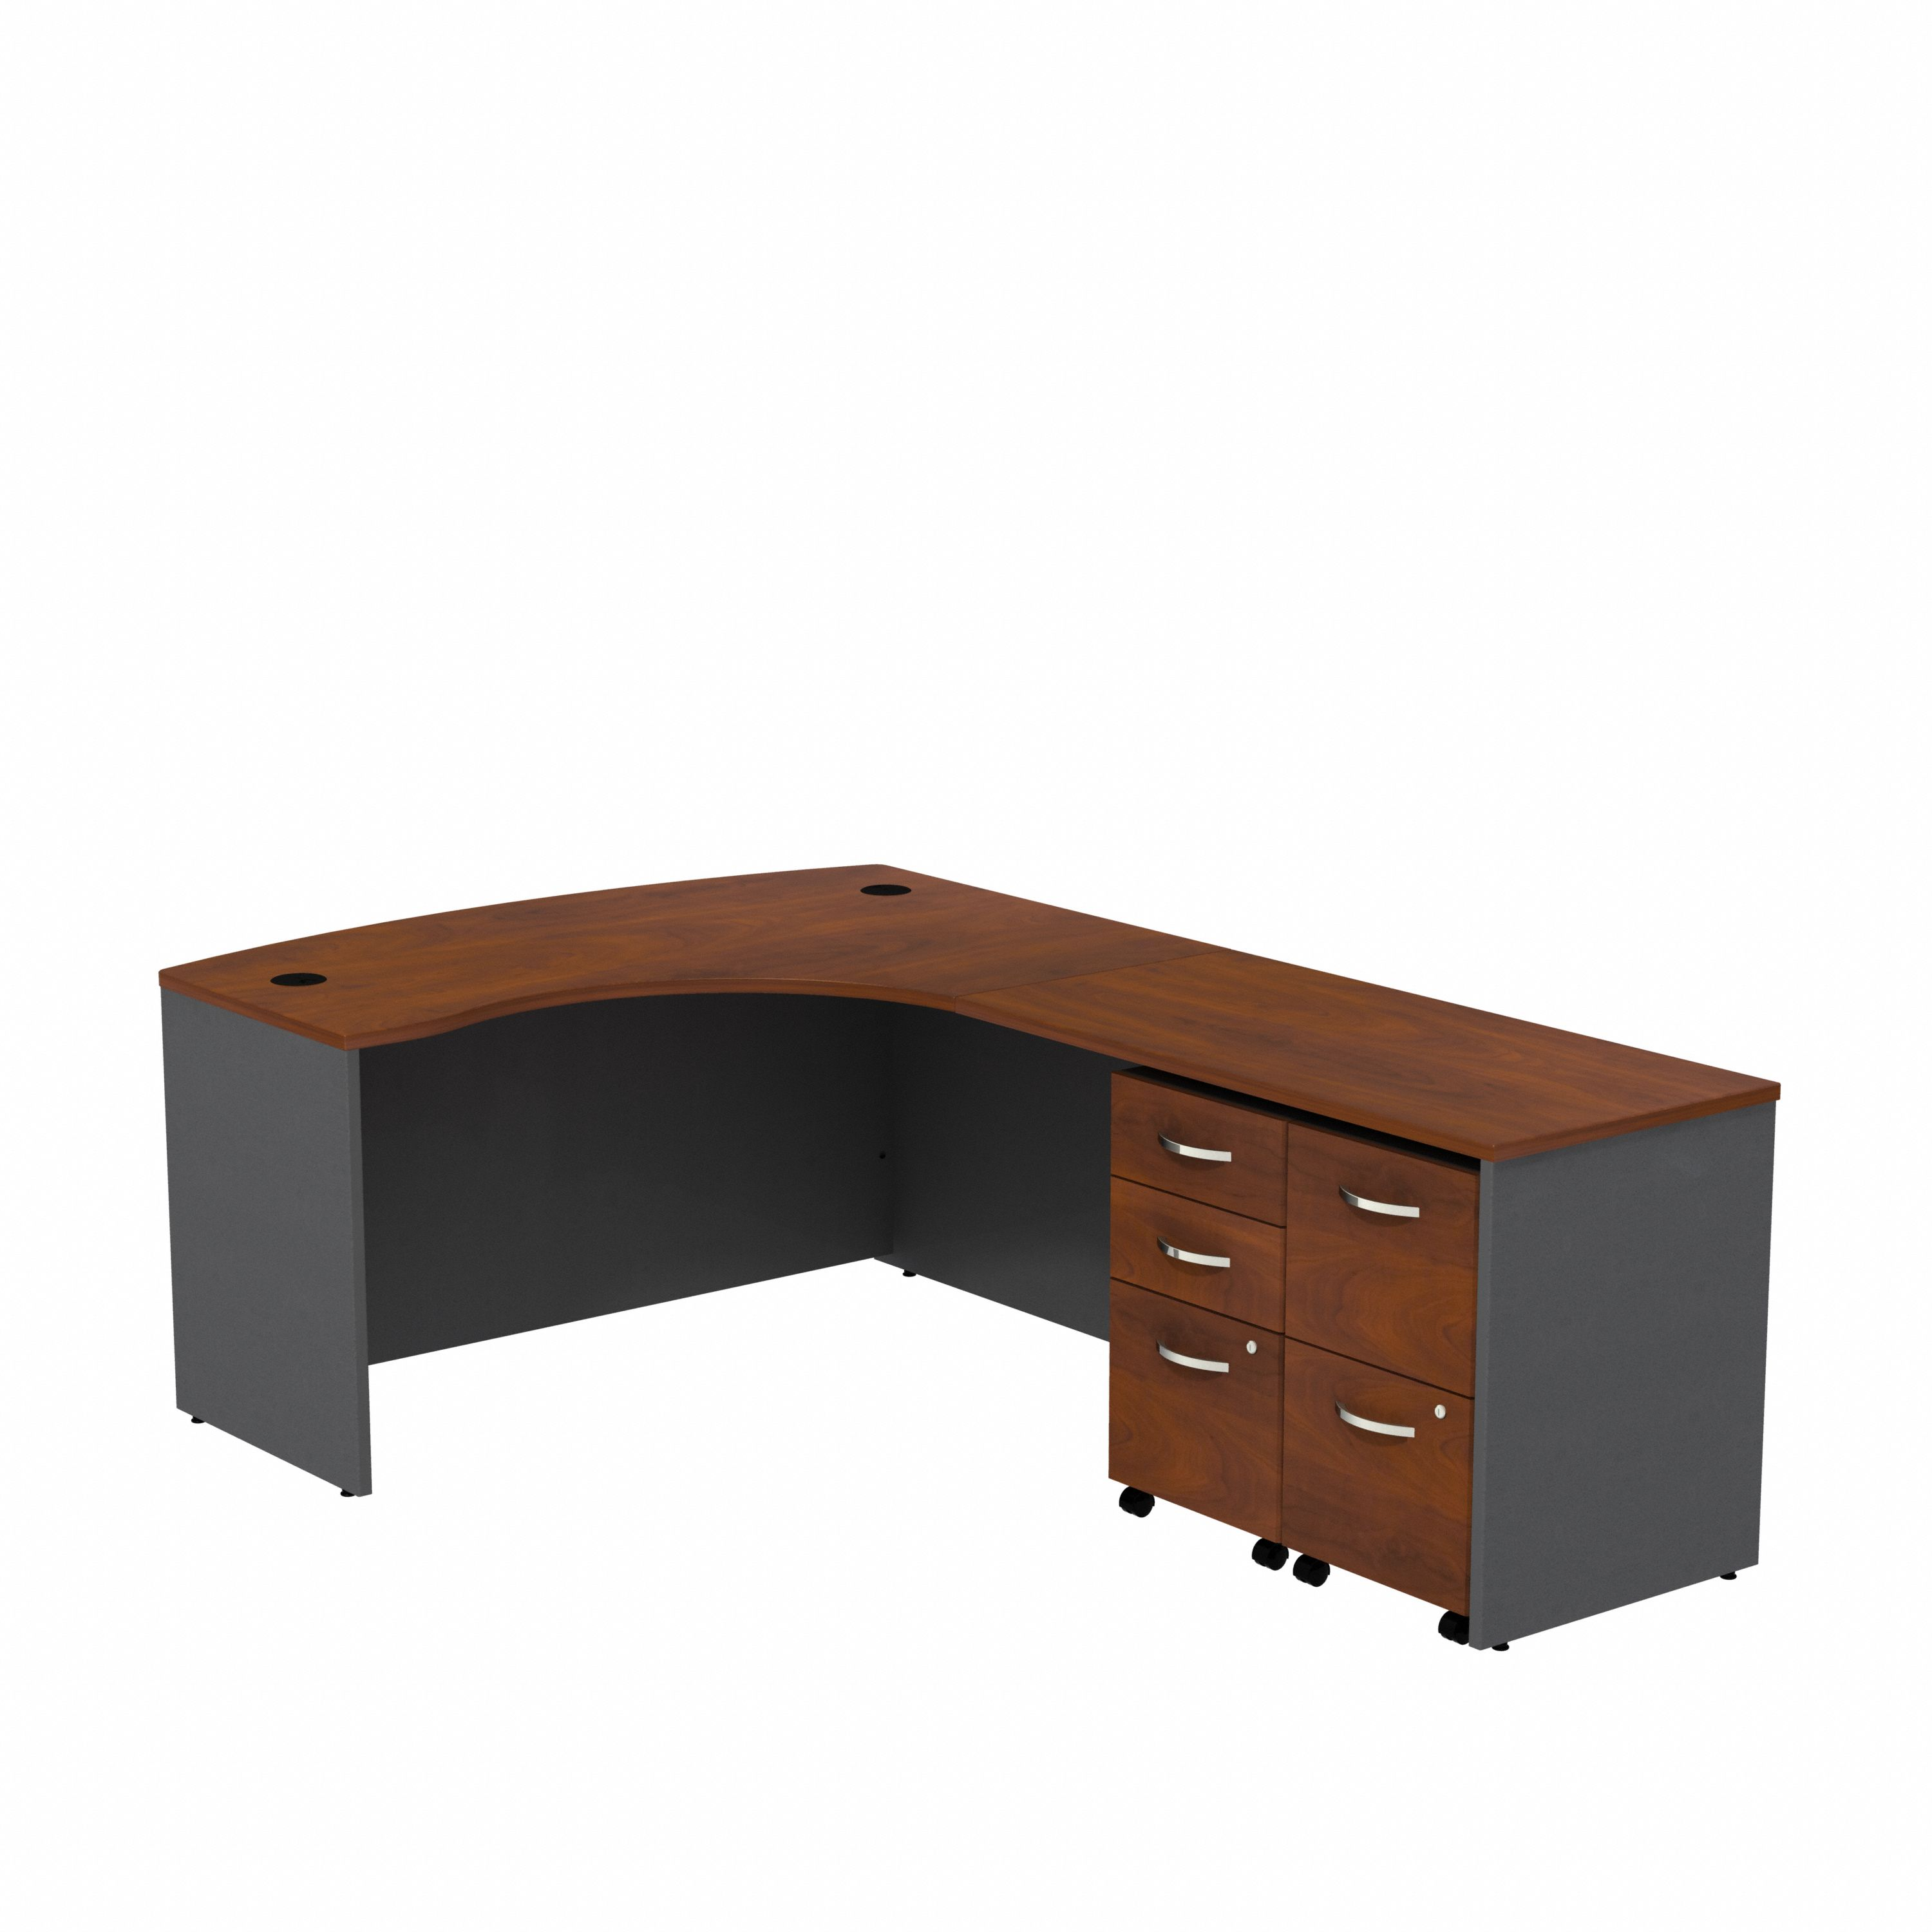 Shop Bush Business Furniture Series C Bow Front Right Handed L Shaped Desk with 2 Mobile Pedestals 02 SRC034HCRSU #color_hansen cherry